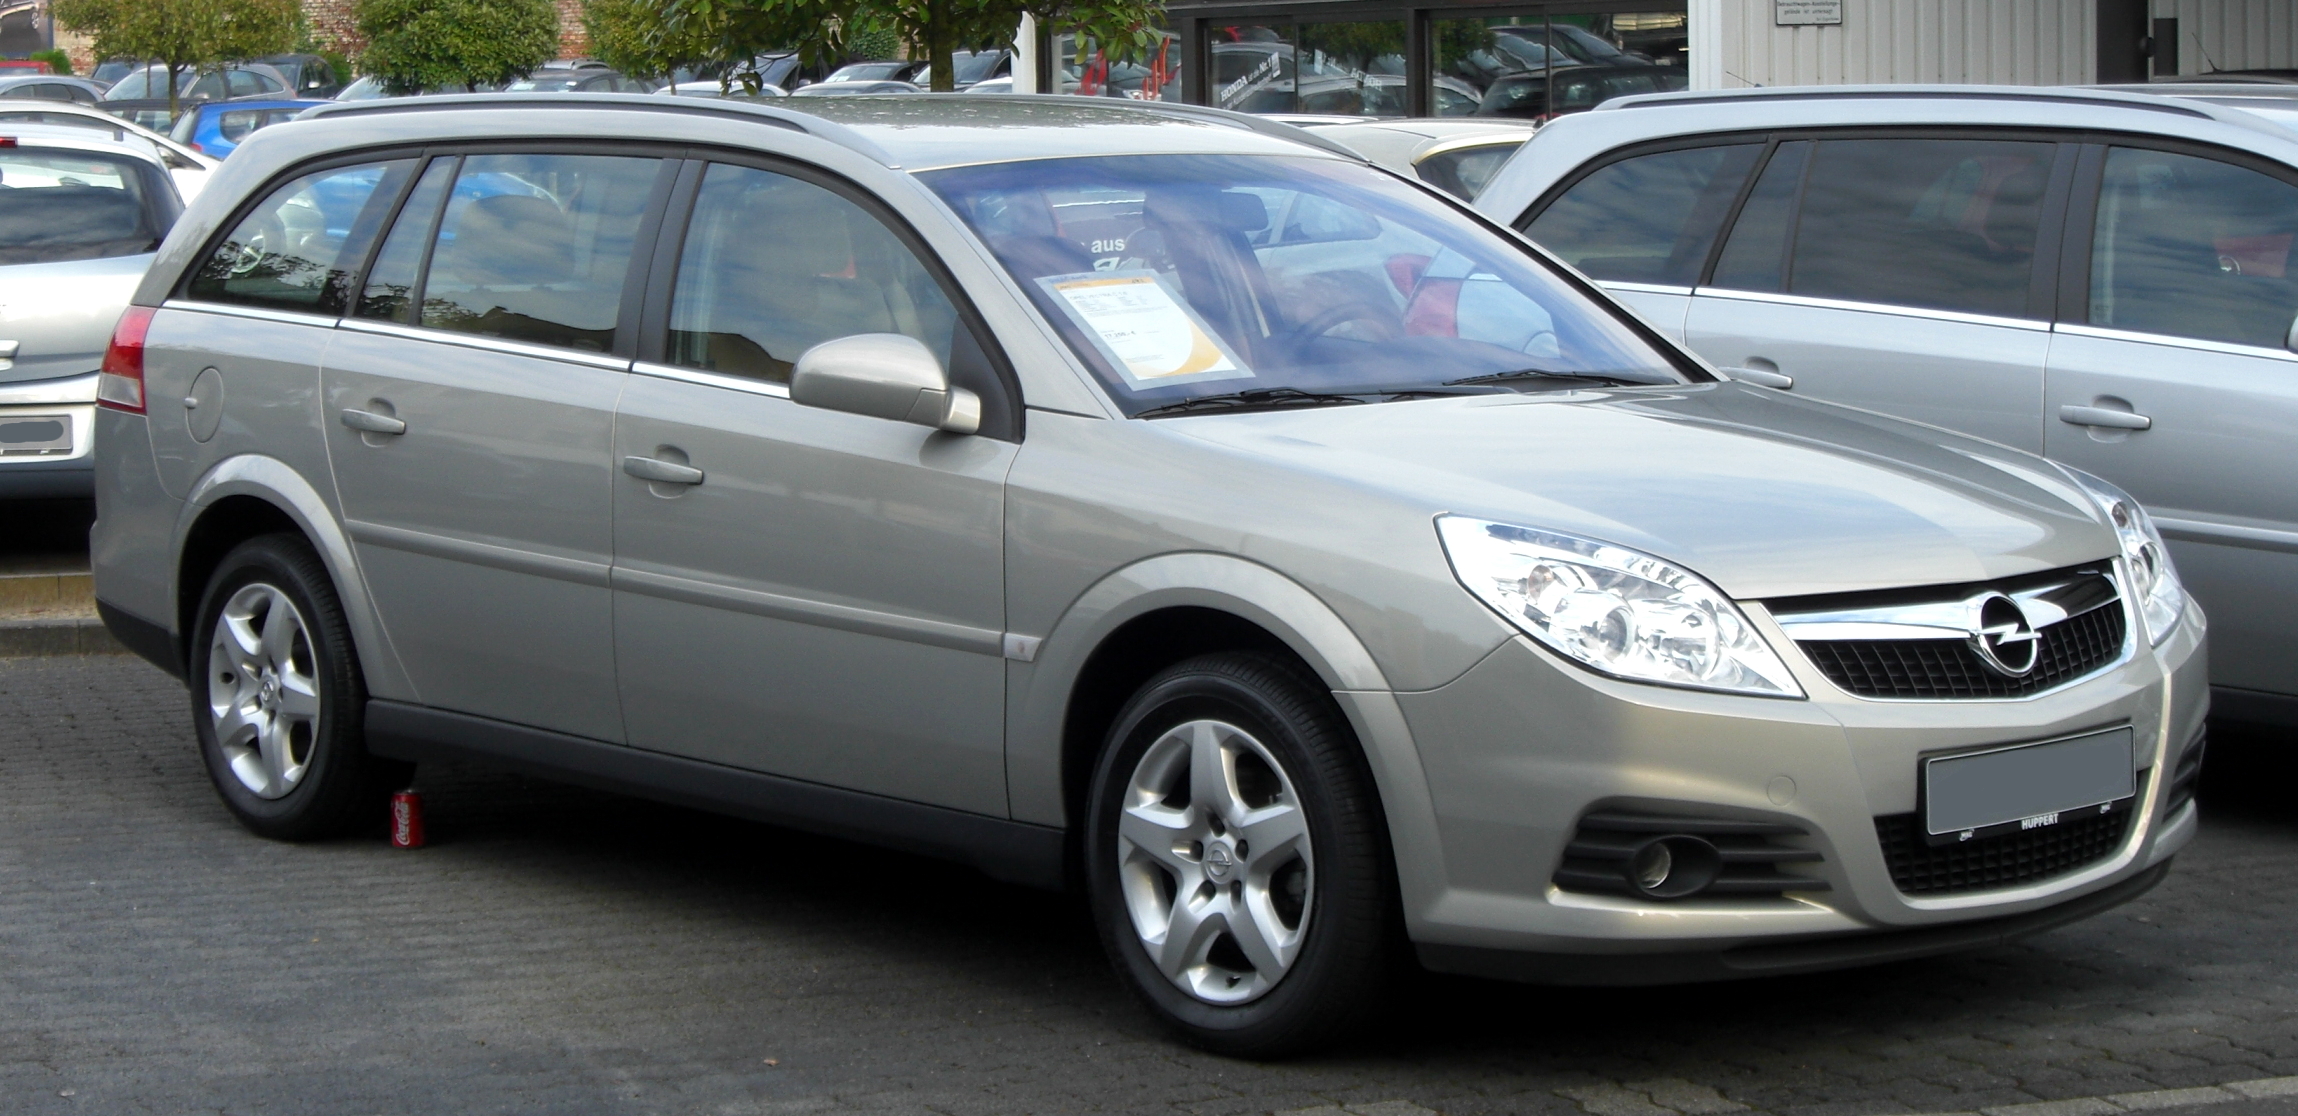 File:Opel Vectra Caravan Facelift front.JPG - Wikimedia Commons